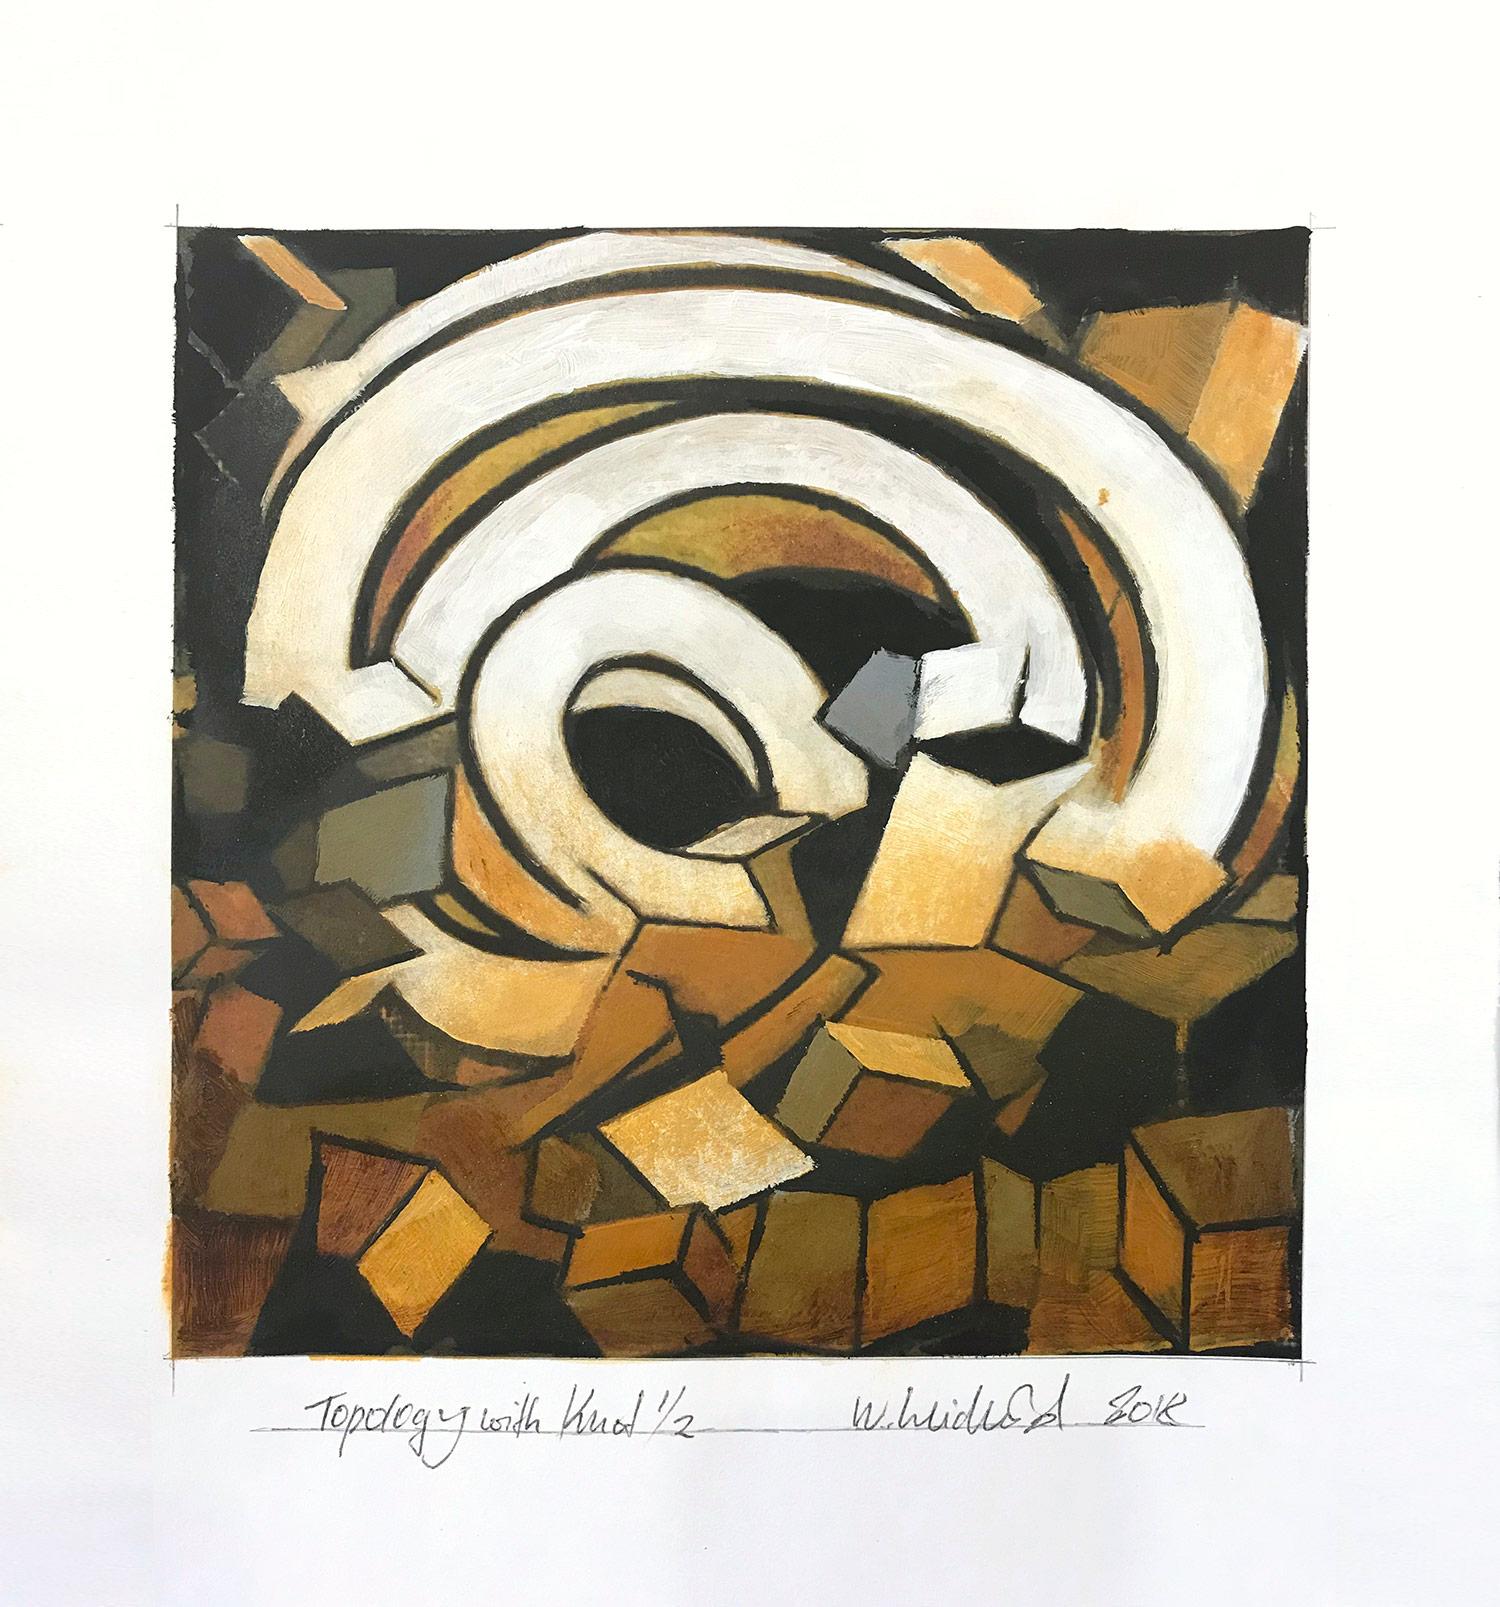 Wolfgang Leidhold Abstract Painting – „Topologie mit Knot 1/2“ Abstraktes, gegenständliches Knotengemälde auf Papier